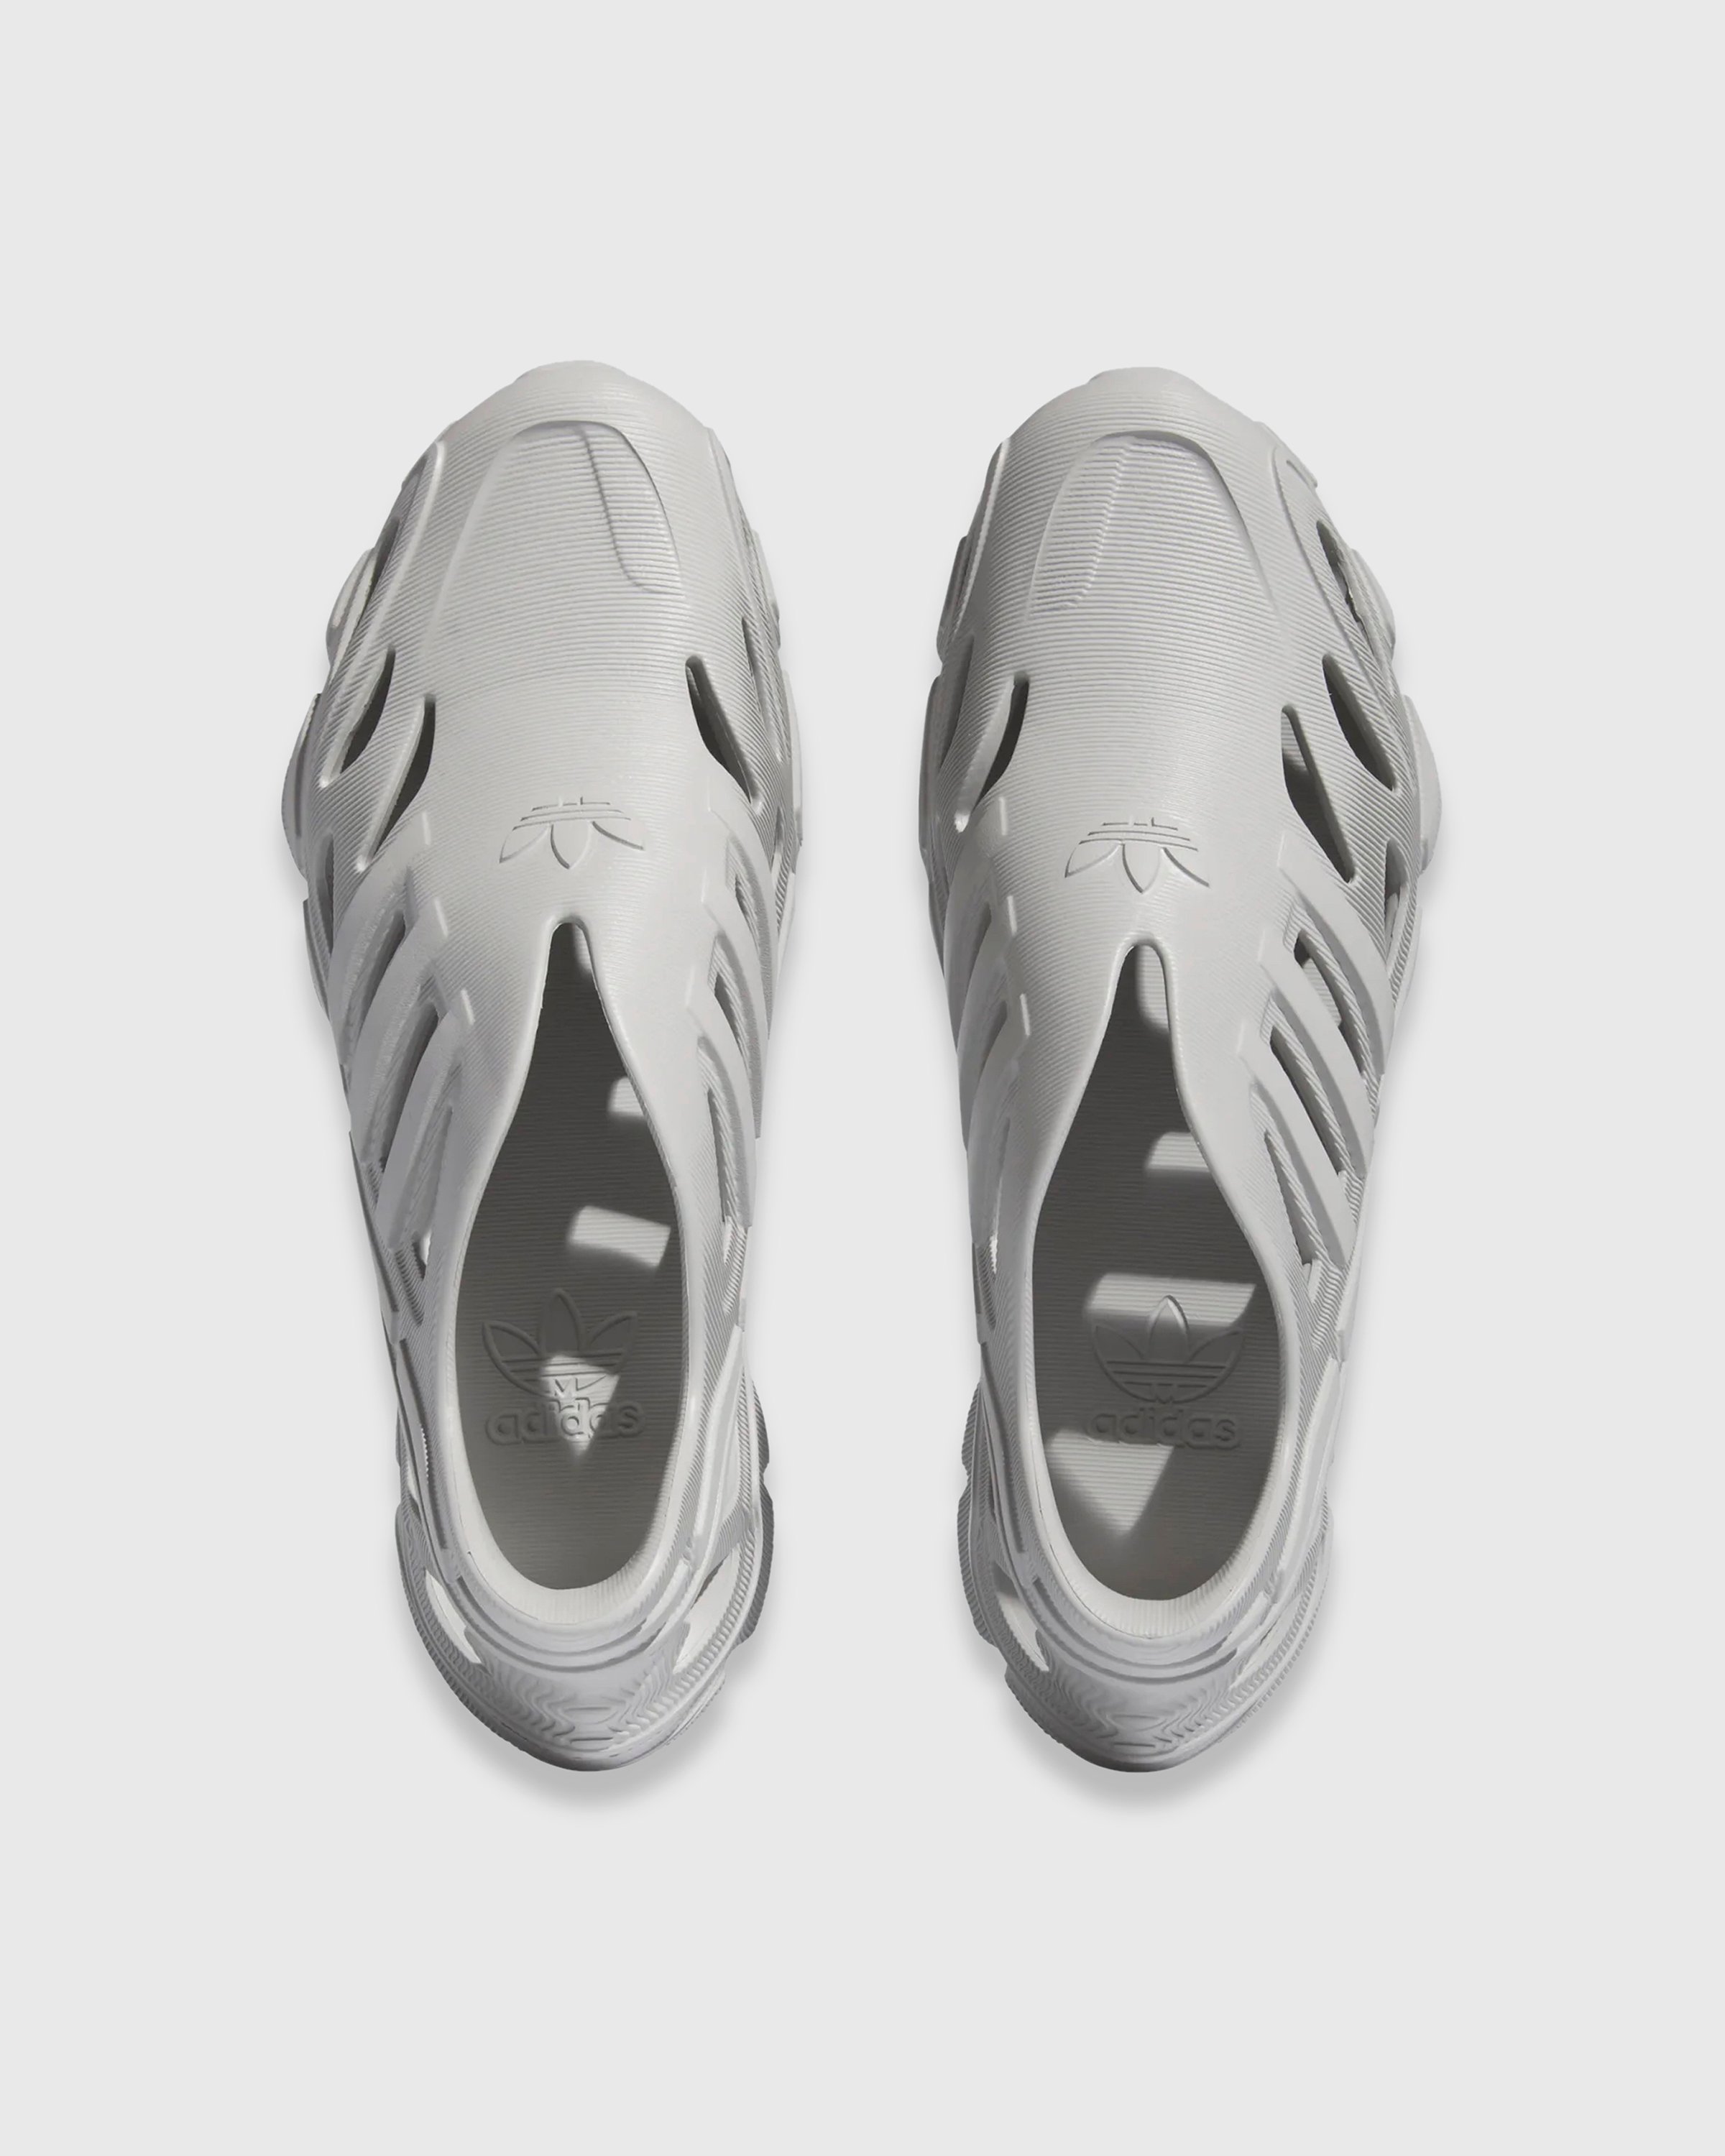 Adidas - adiFOM SUPERNOVA GRETWO/GRETWO/GRETWO - Footwear - Grey - Image 3